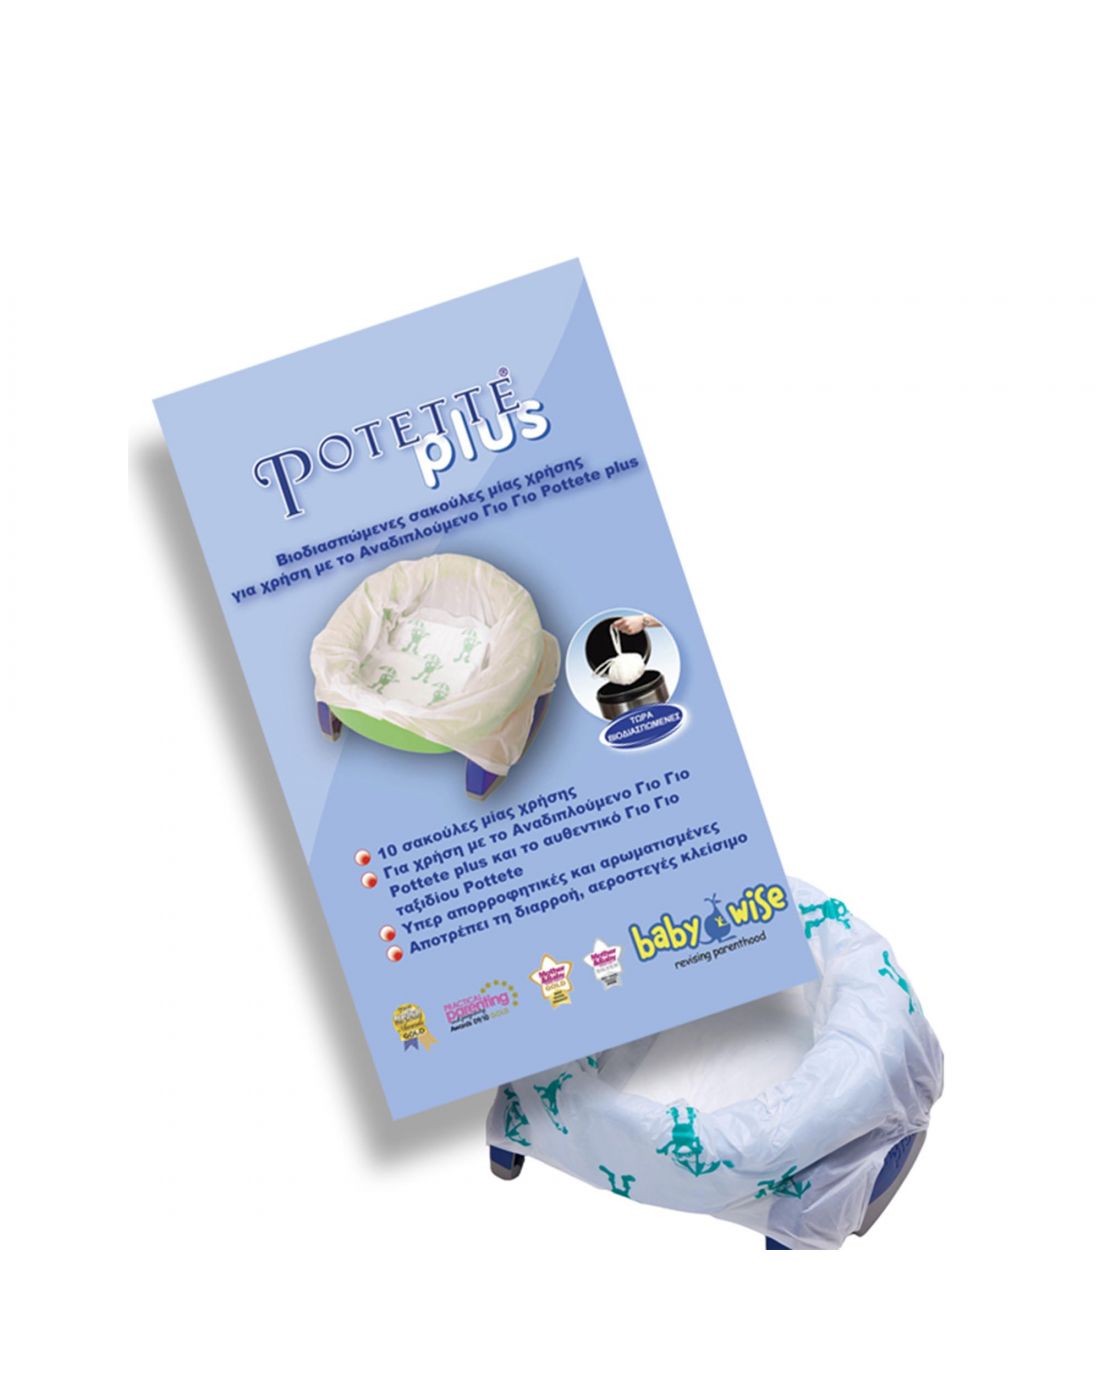 Potette Plus Σακούλες Αναπλήρωσης Βιοδιασπώμενες (Σετ 10 τμχ) Babywise